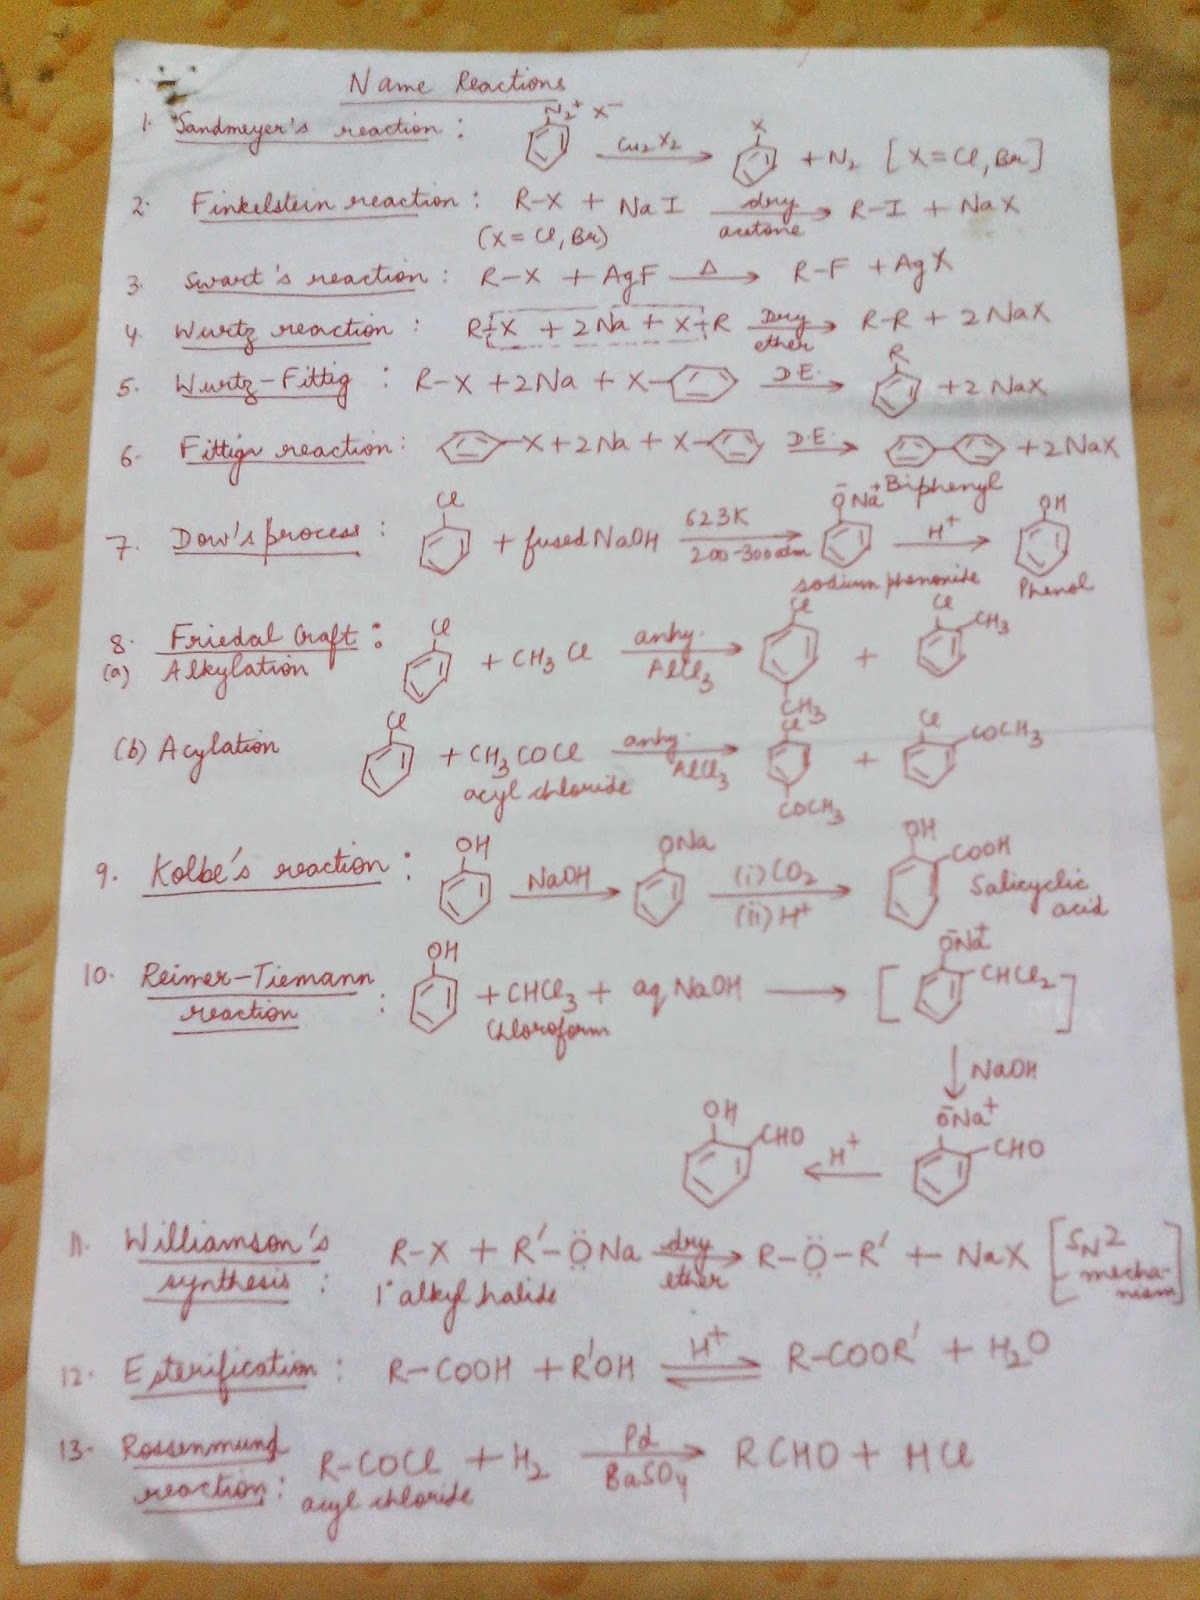 Organic Chemistry Reagents Chart Pdf